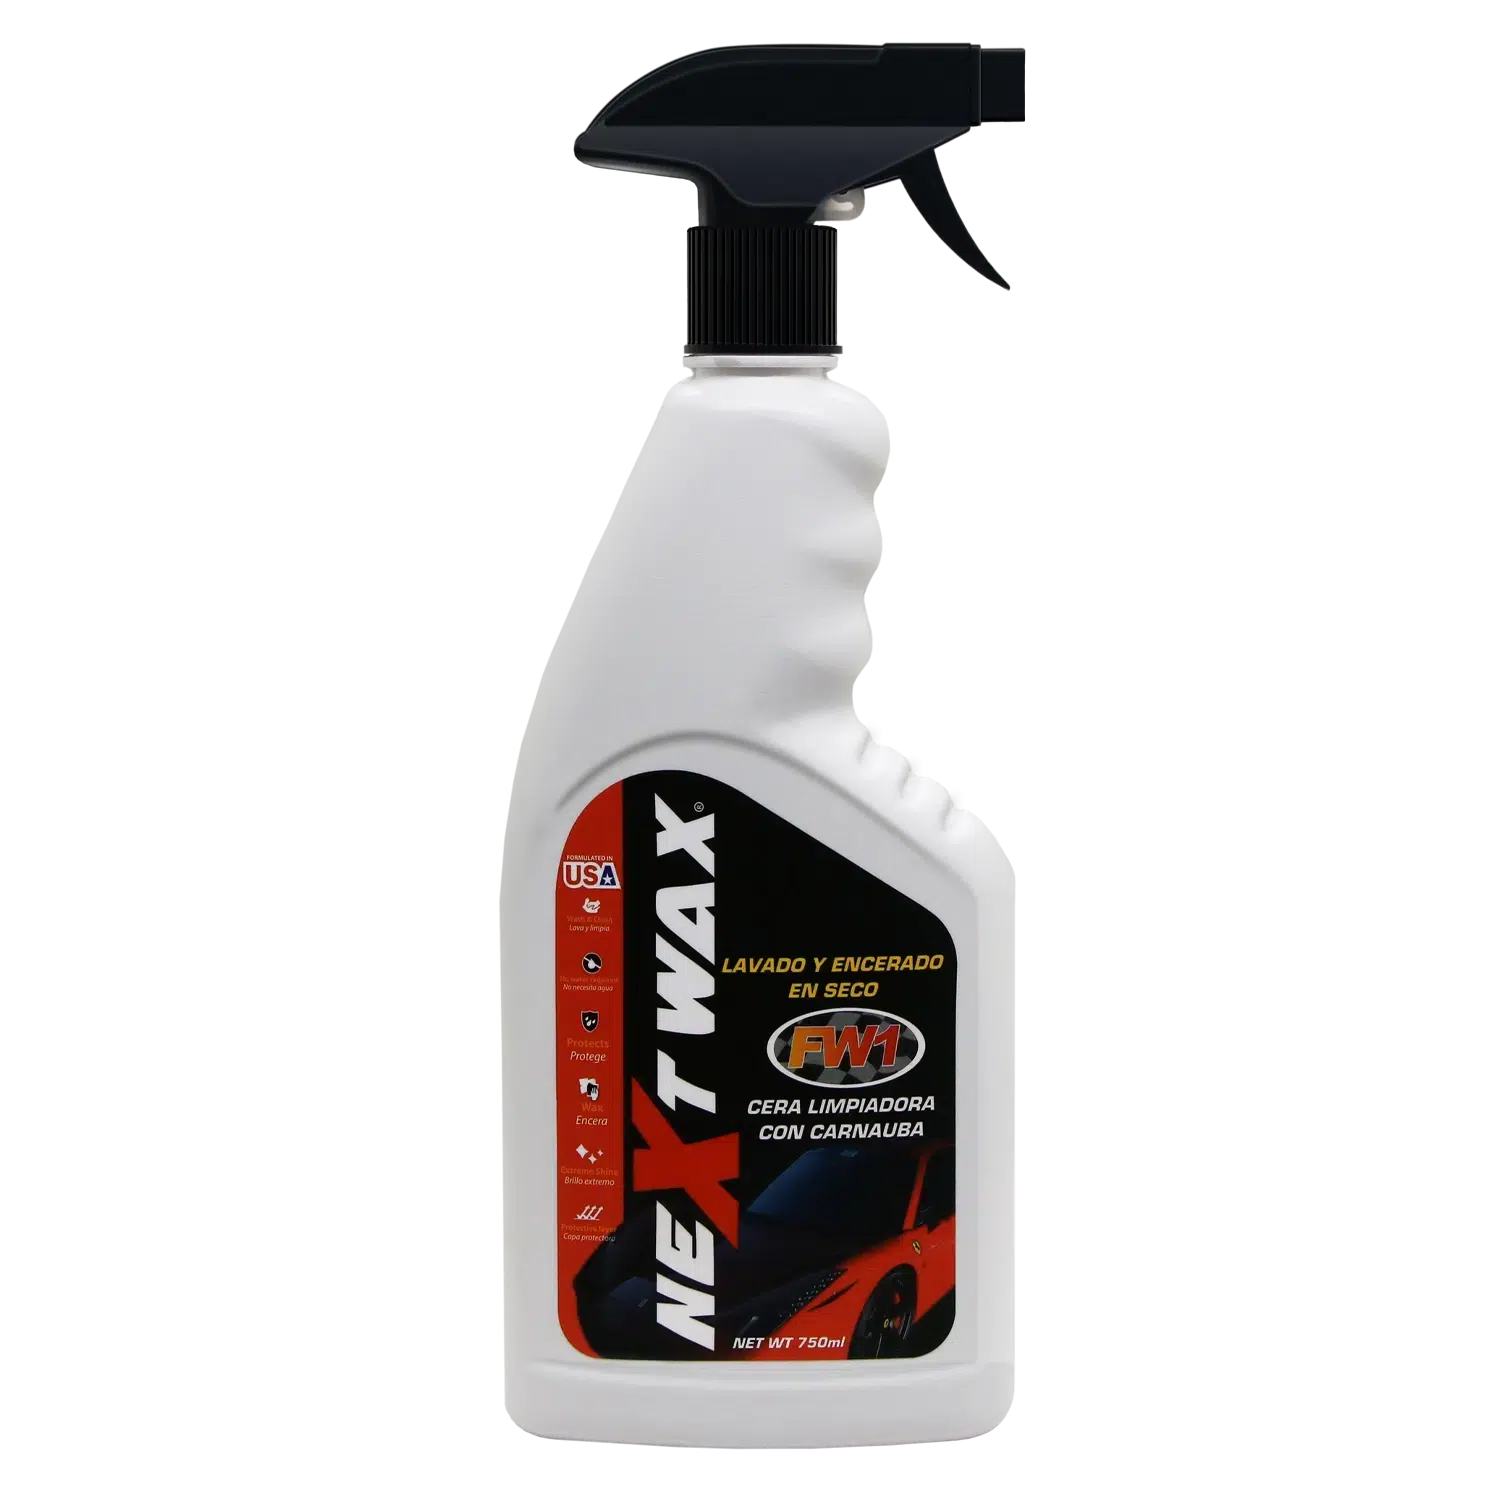 FW1 Cleaning Wax, un producto, múltiples usos. 🚗✨ Mira cómo